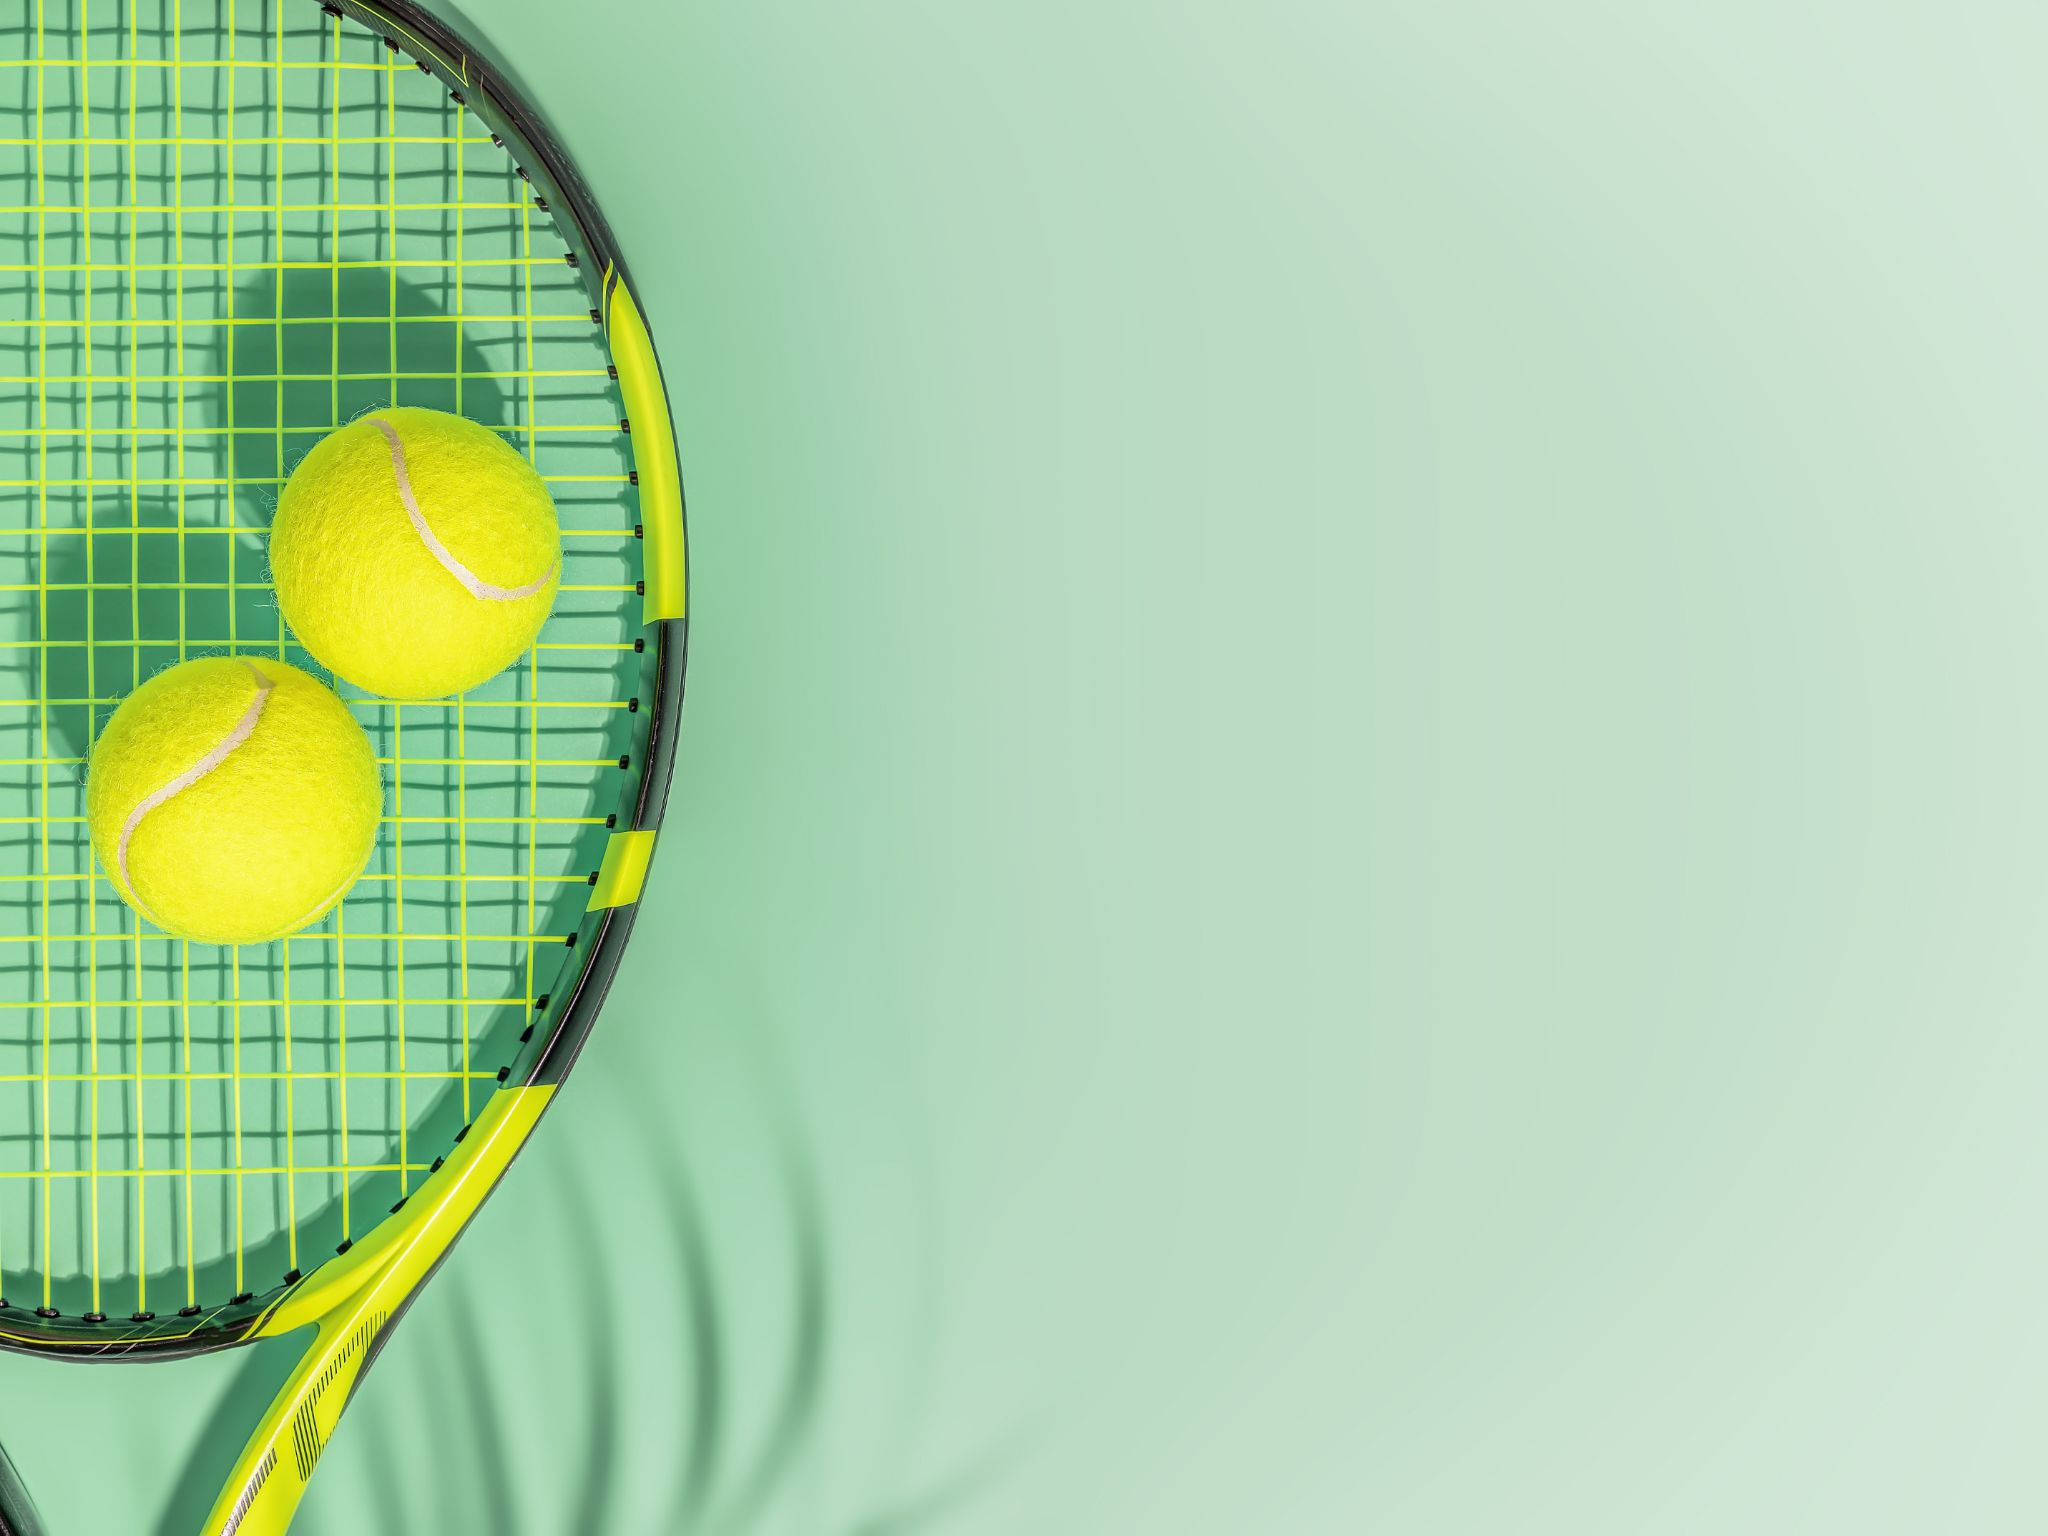 Tennis racket and yellow tennis balls